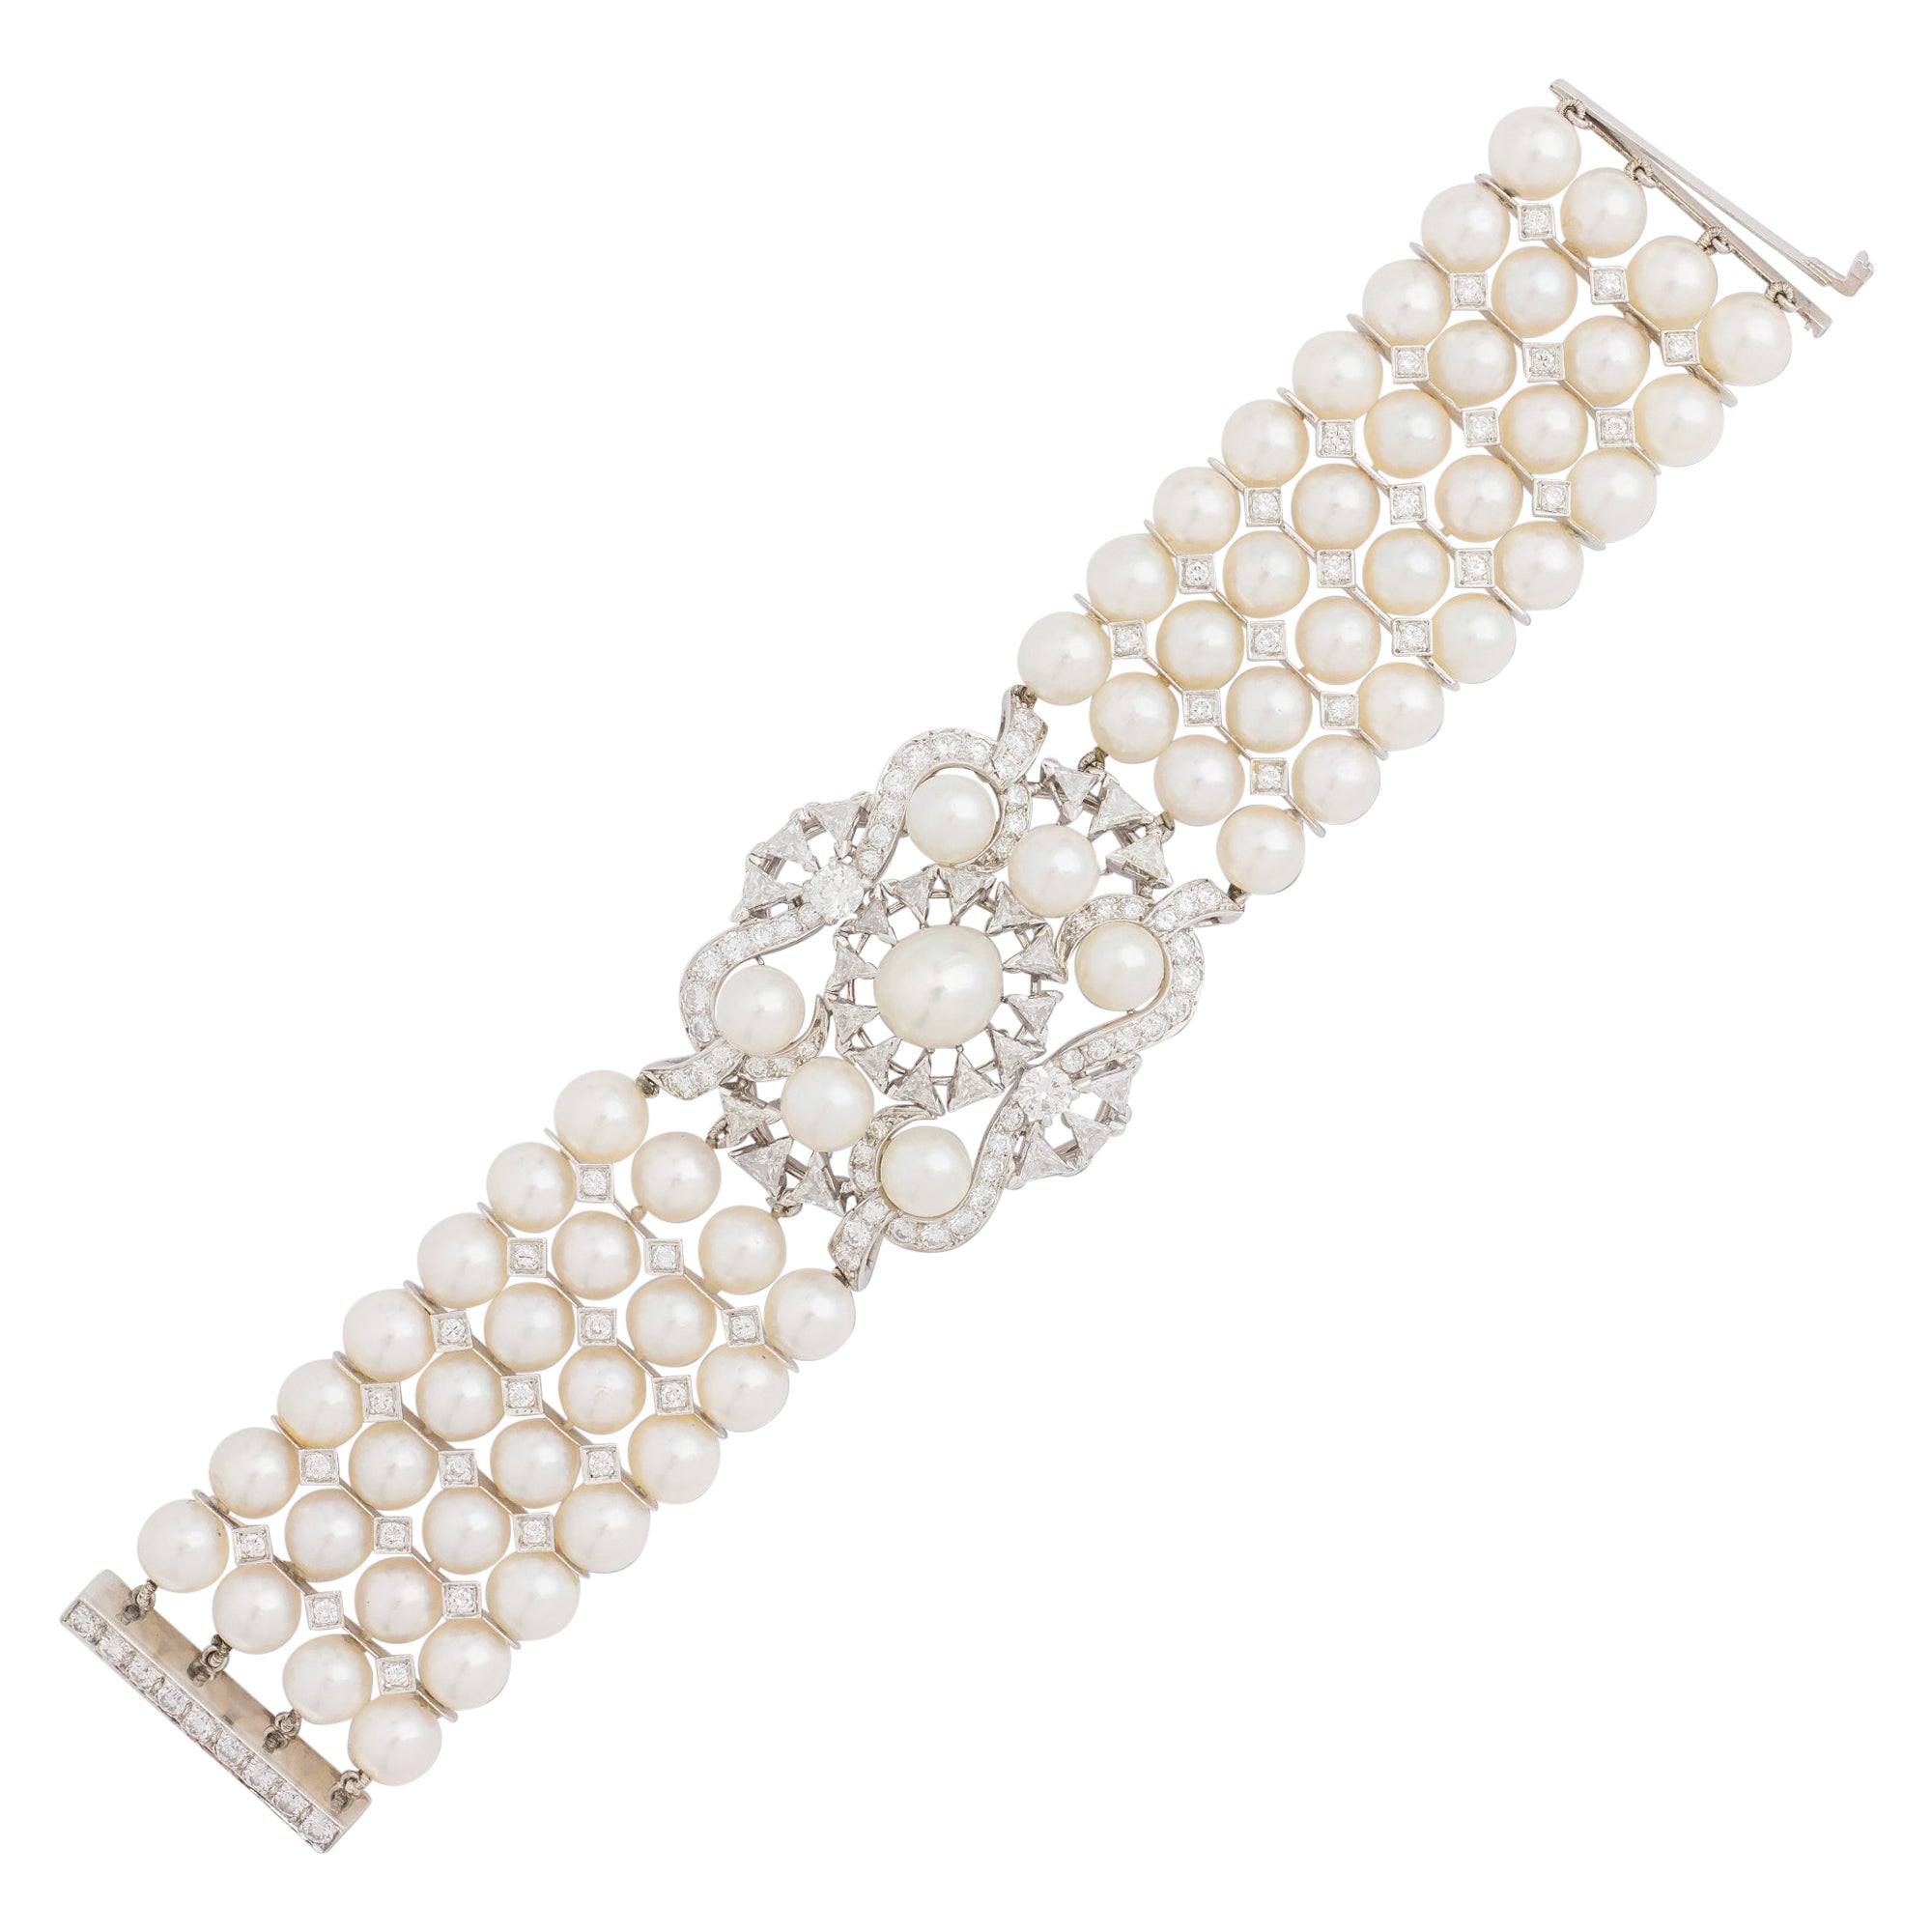 Impressive Diamond & Pearl Bracelet Set in Platinum Retailed by David R. Balogh For Sale